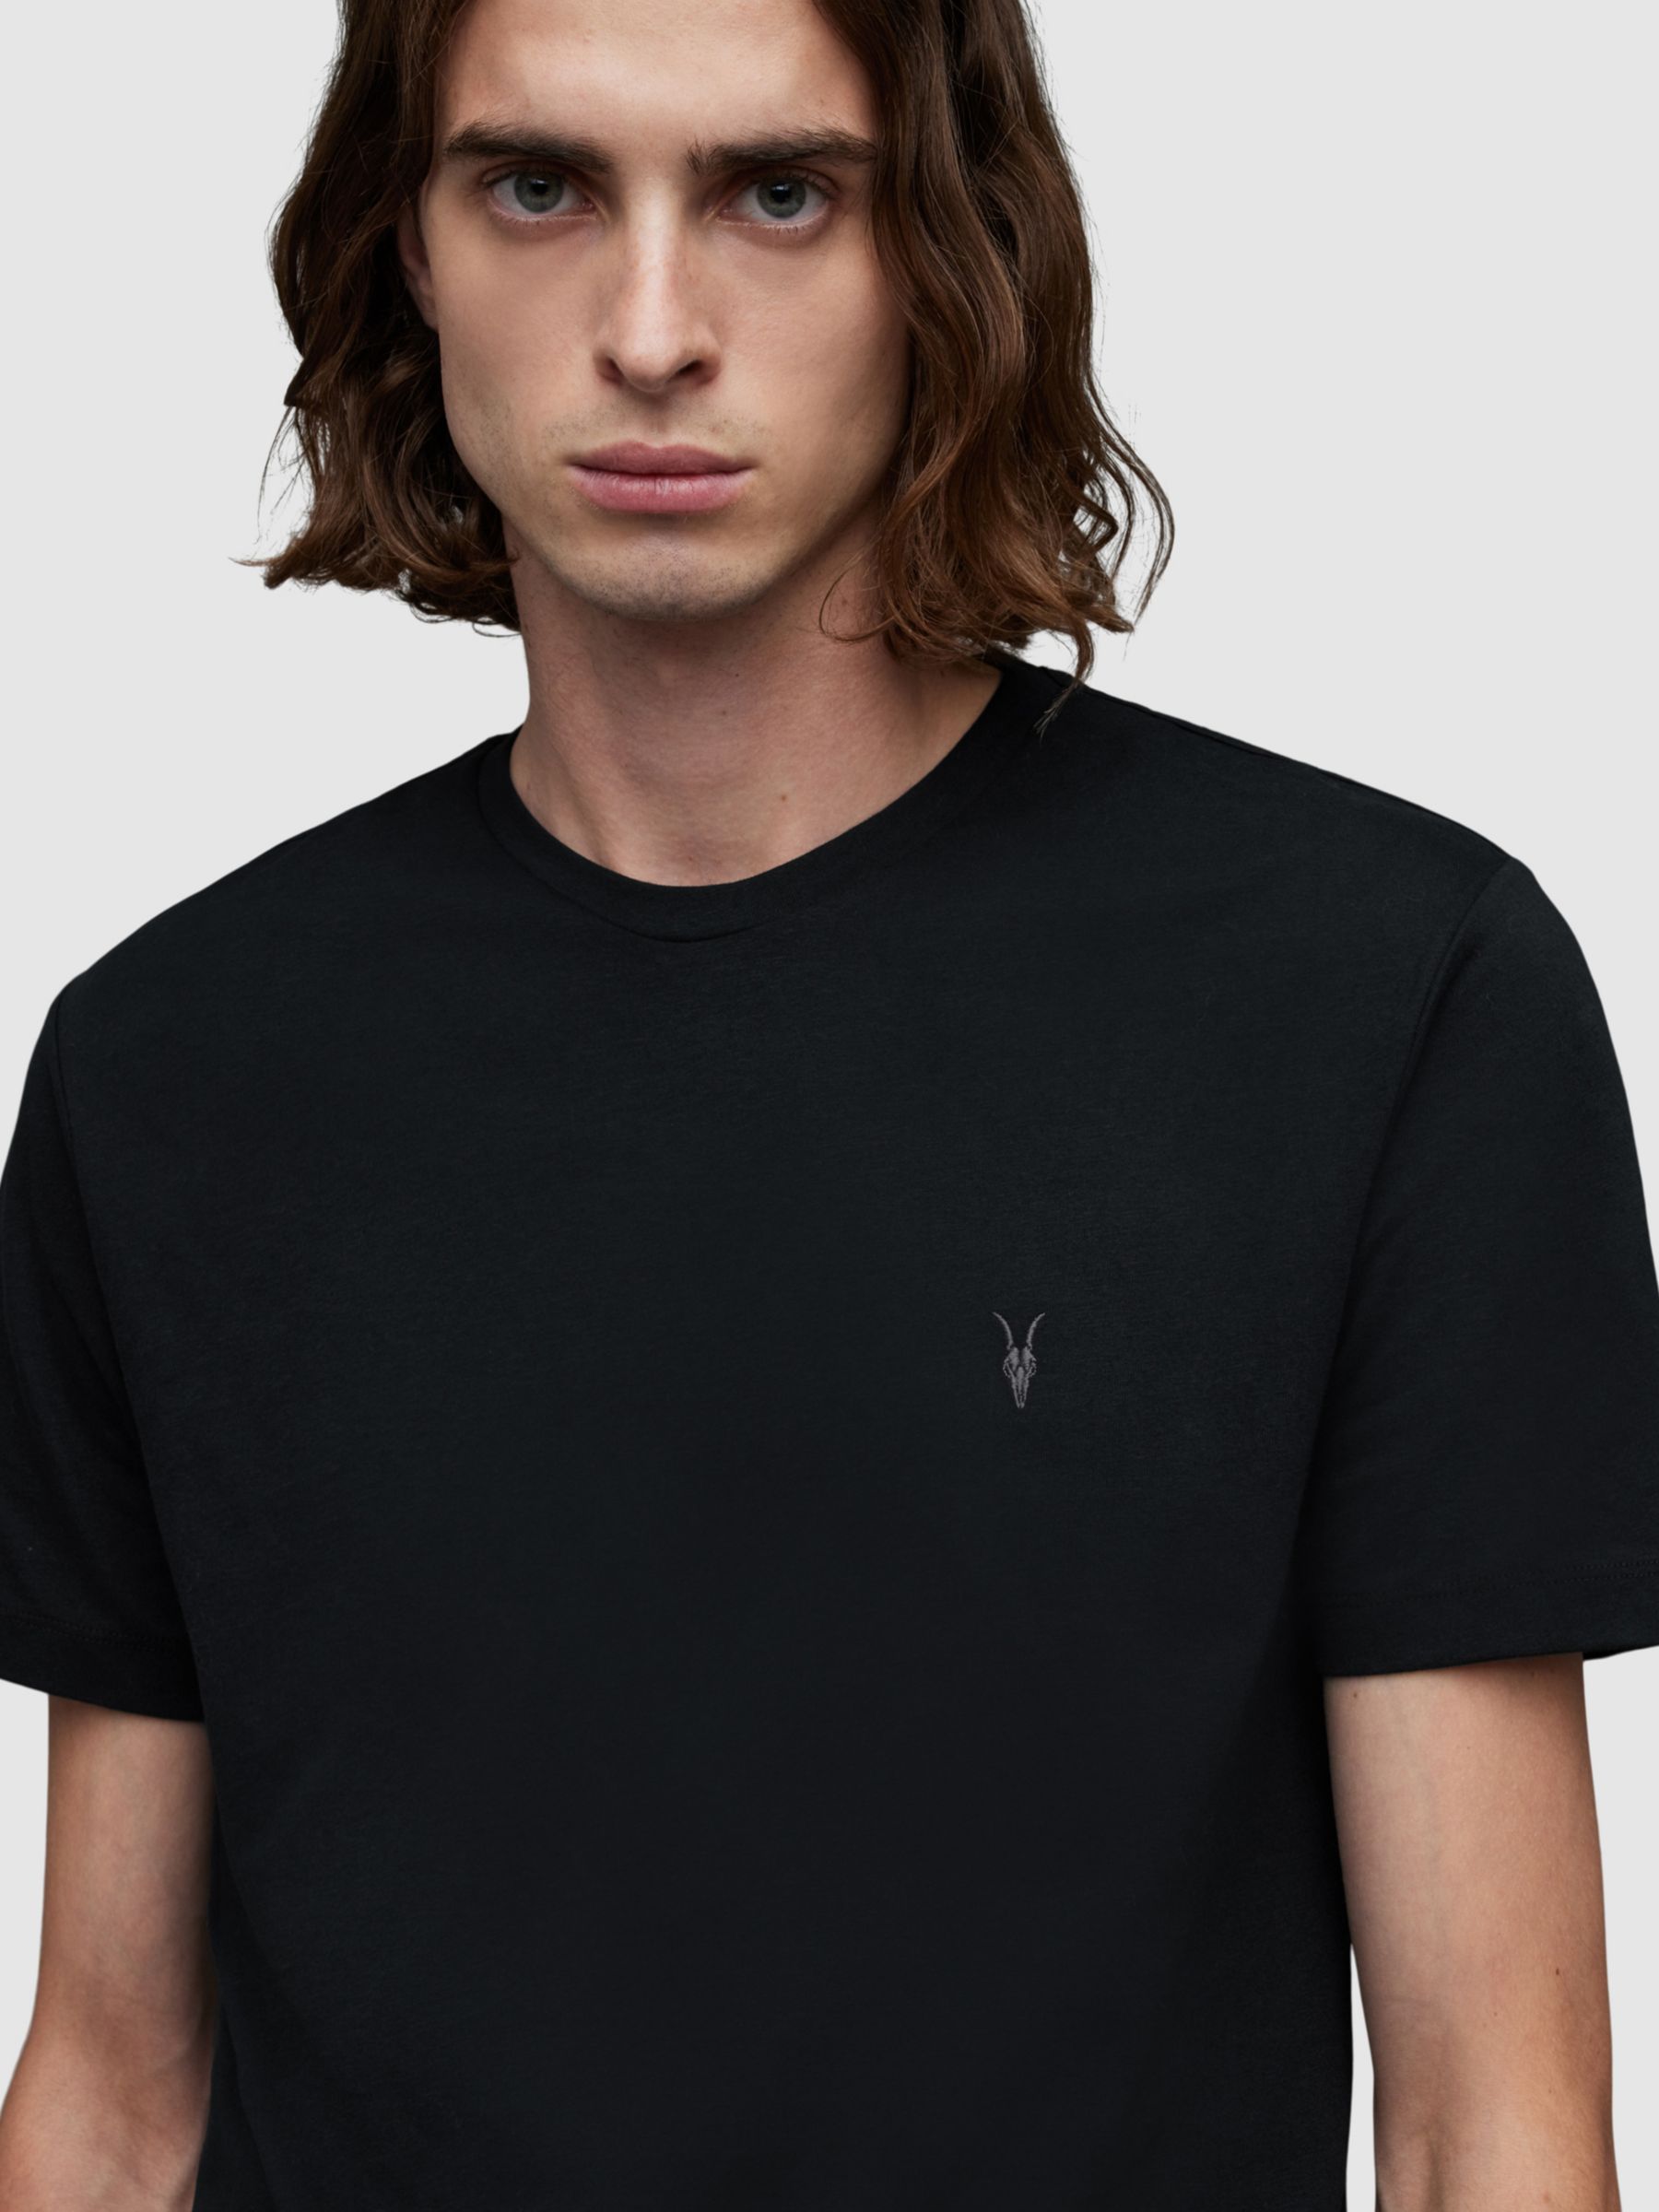 AllSaints Brace Tonic Crew Neck T-Shirts, Pack of 3, Black, XS